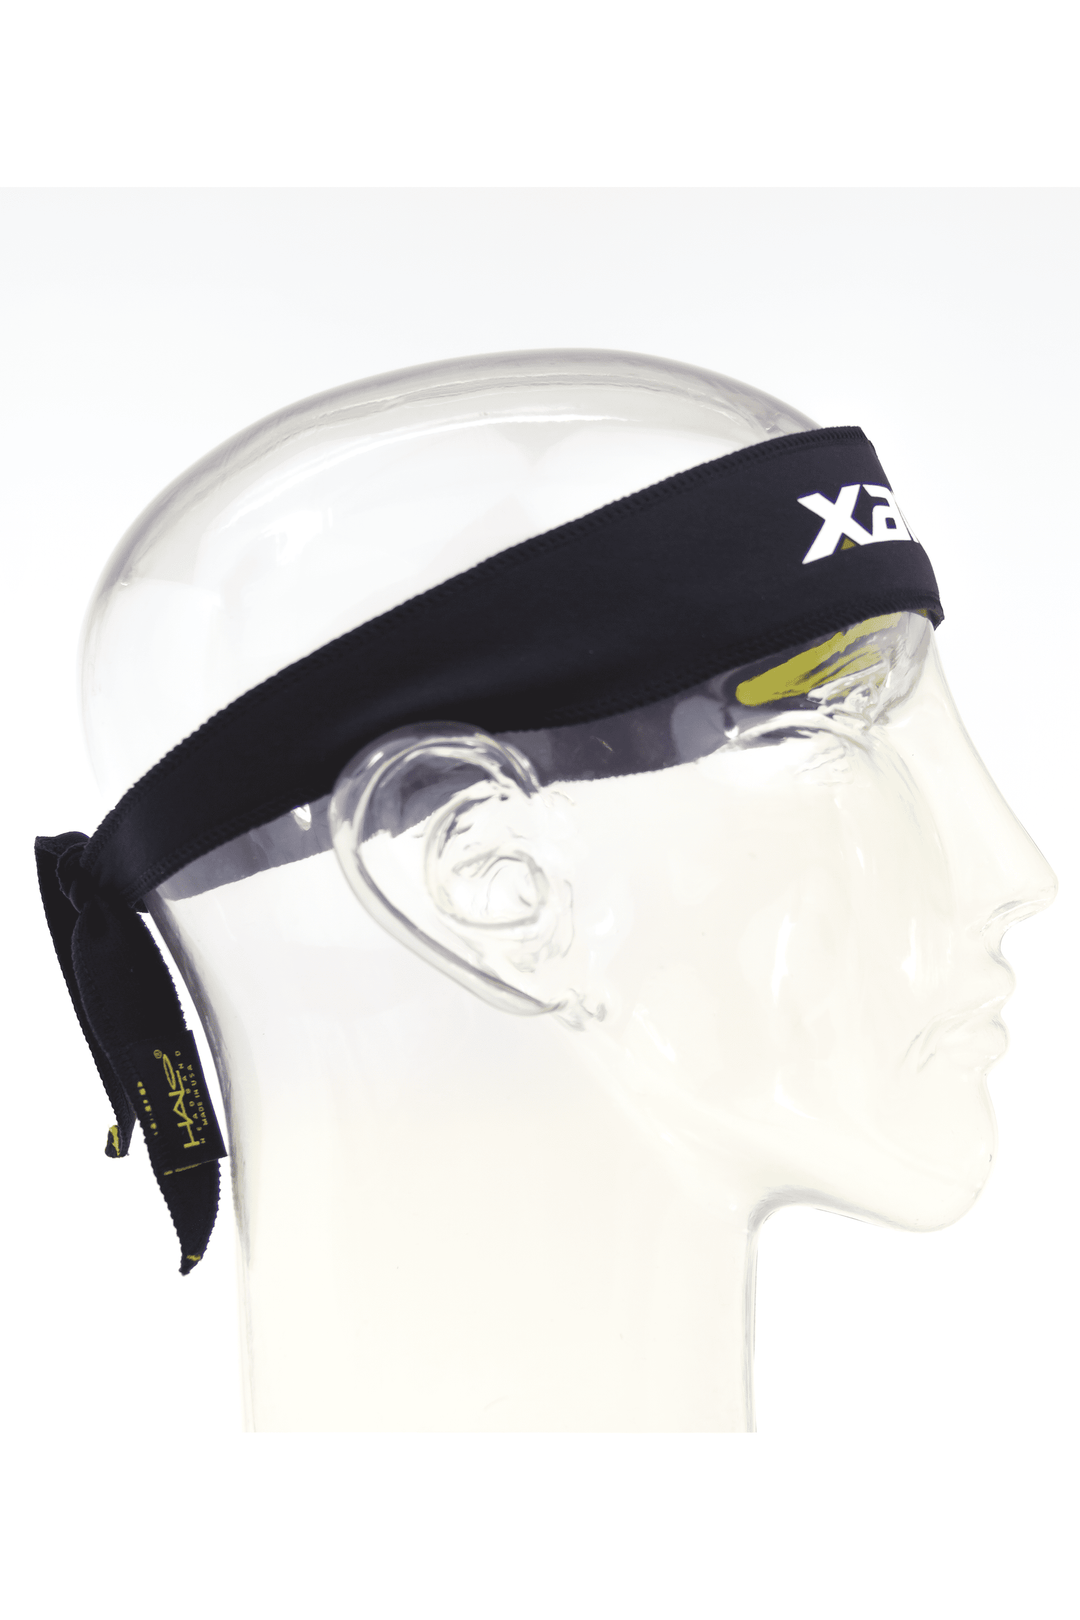 Halo I Tie Headband with Xamsa logo - XamsaSquash